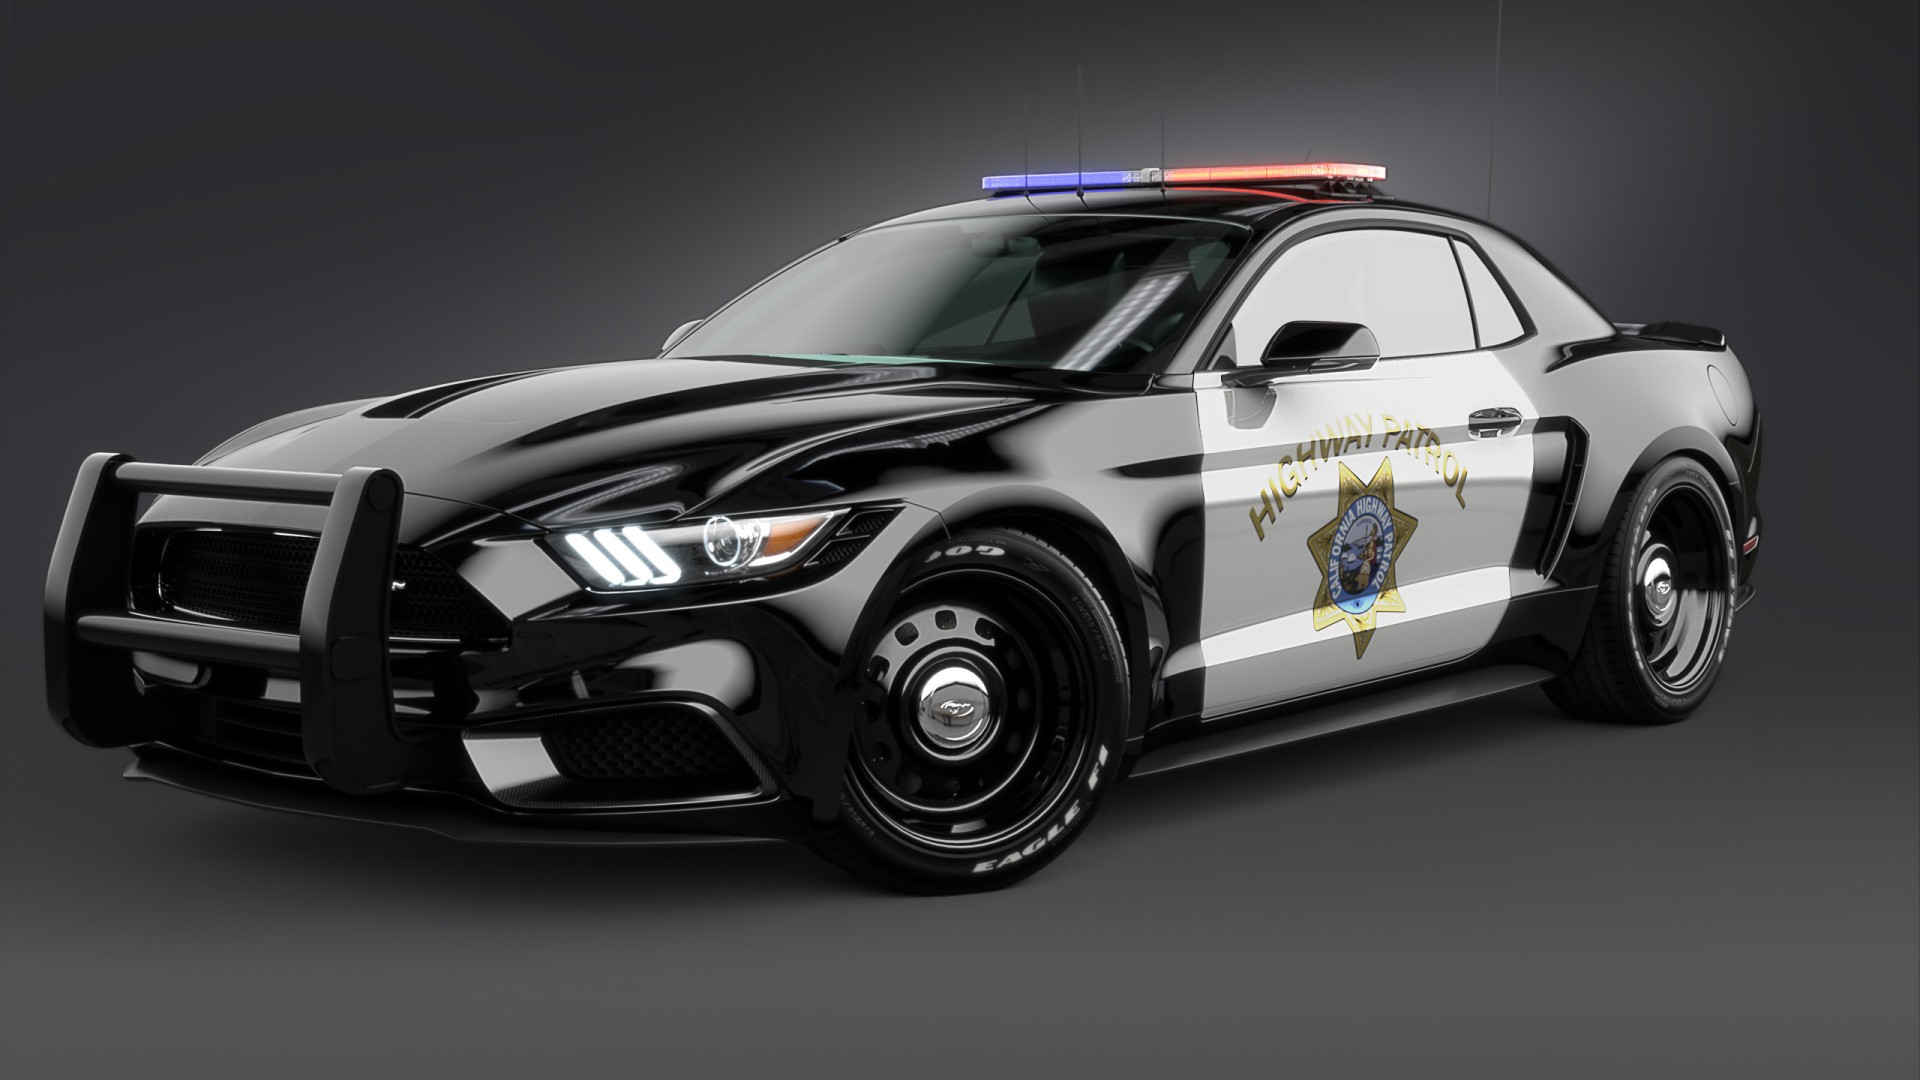 2017 Ford Mustang NotchBack Design Police 2 Wallpaper | HD ...